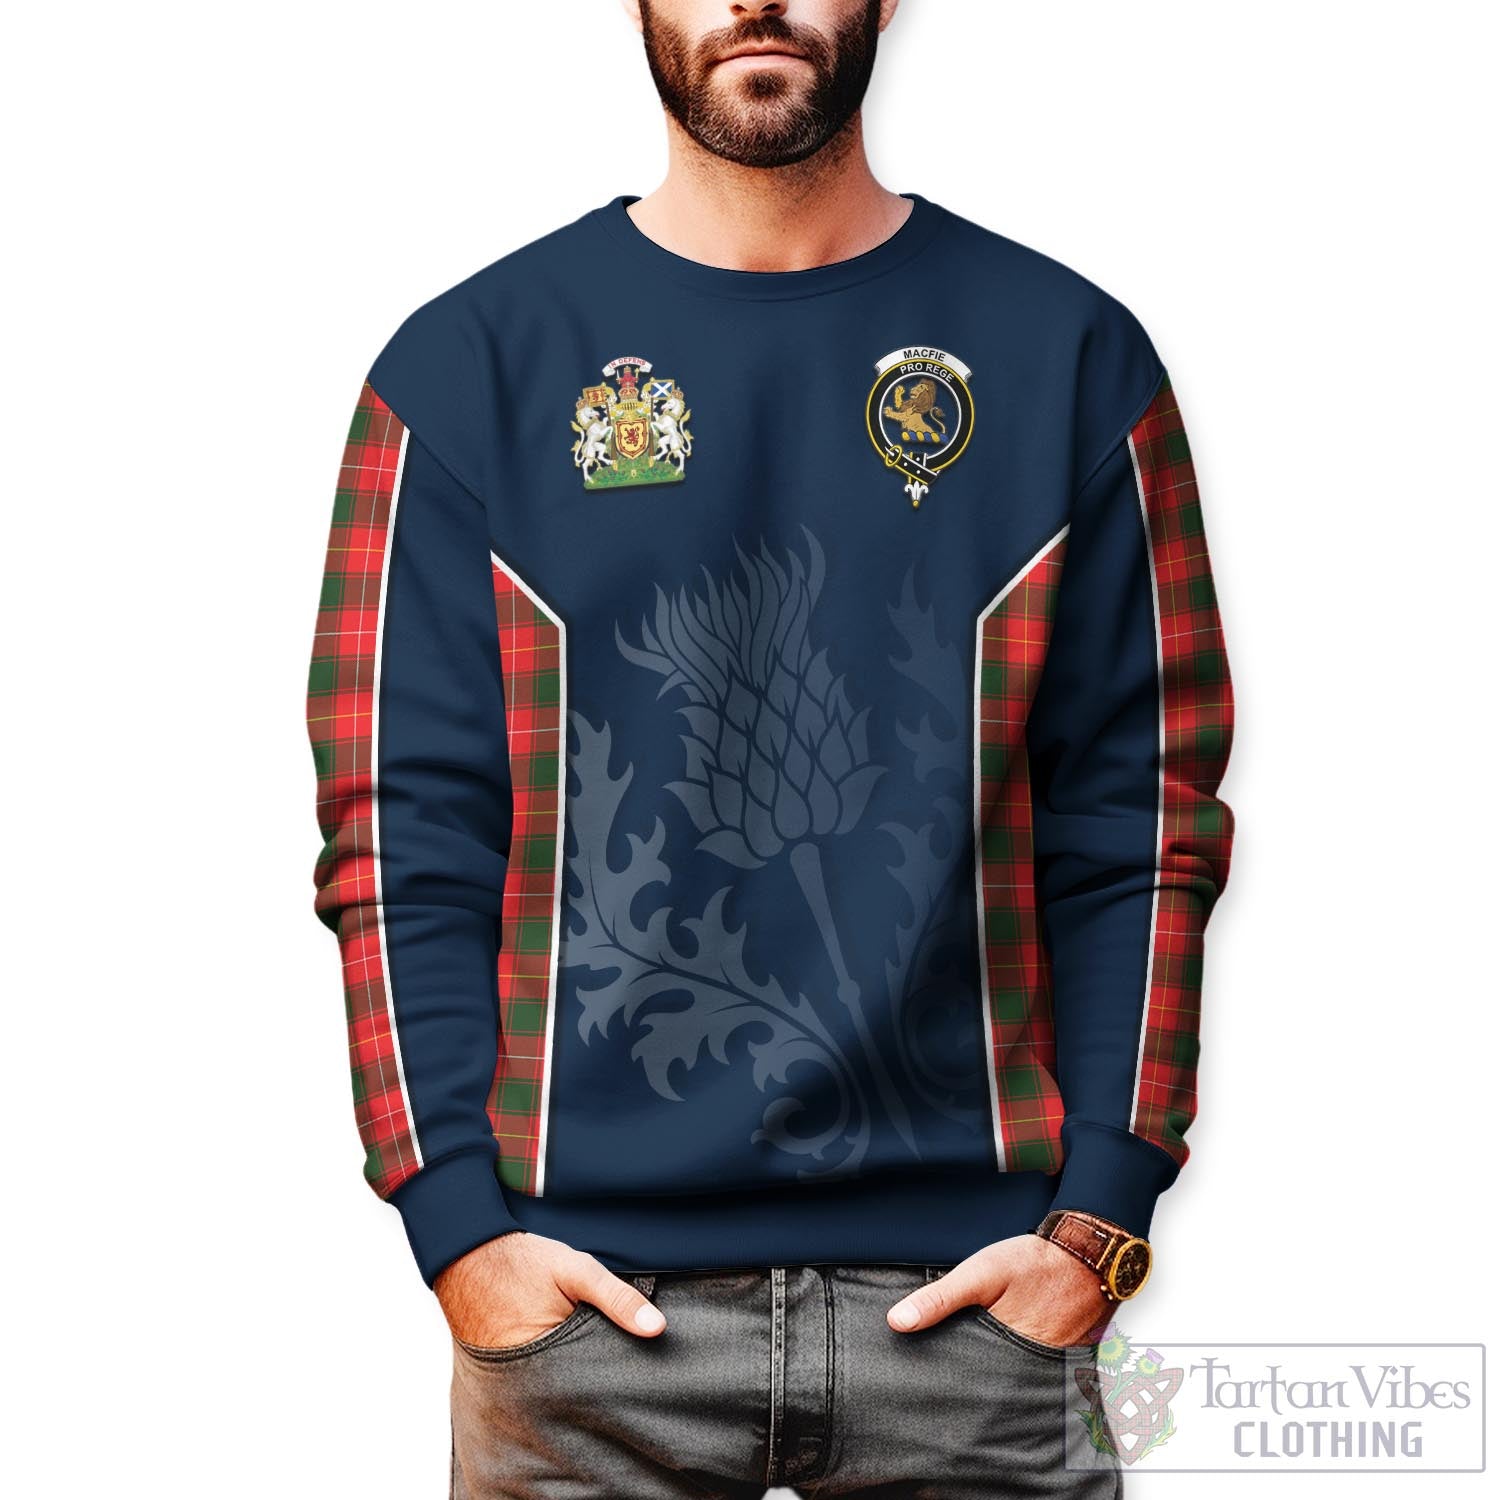 Tartan Vibes Clothing MacFie Modern Tartan Sweatshirt with Family Crest and Scottish Thistle Vibes Sport Style